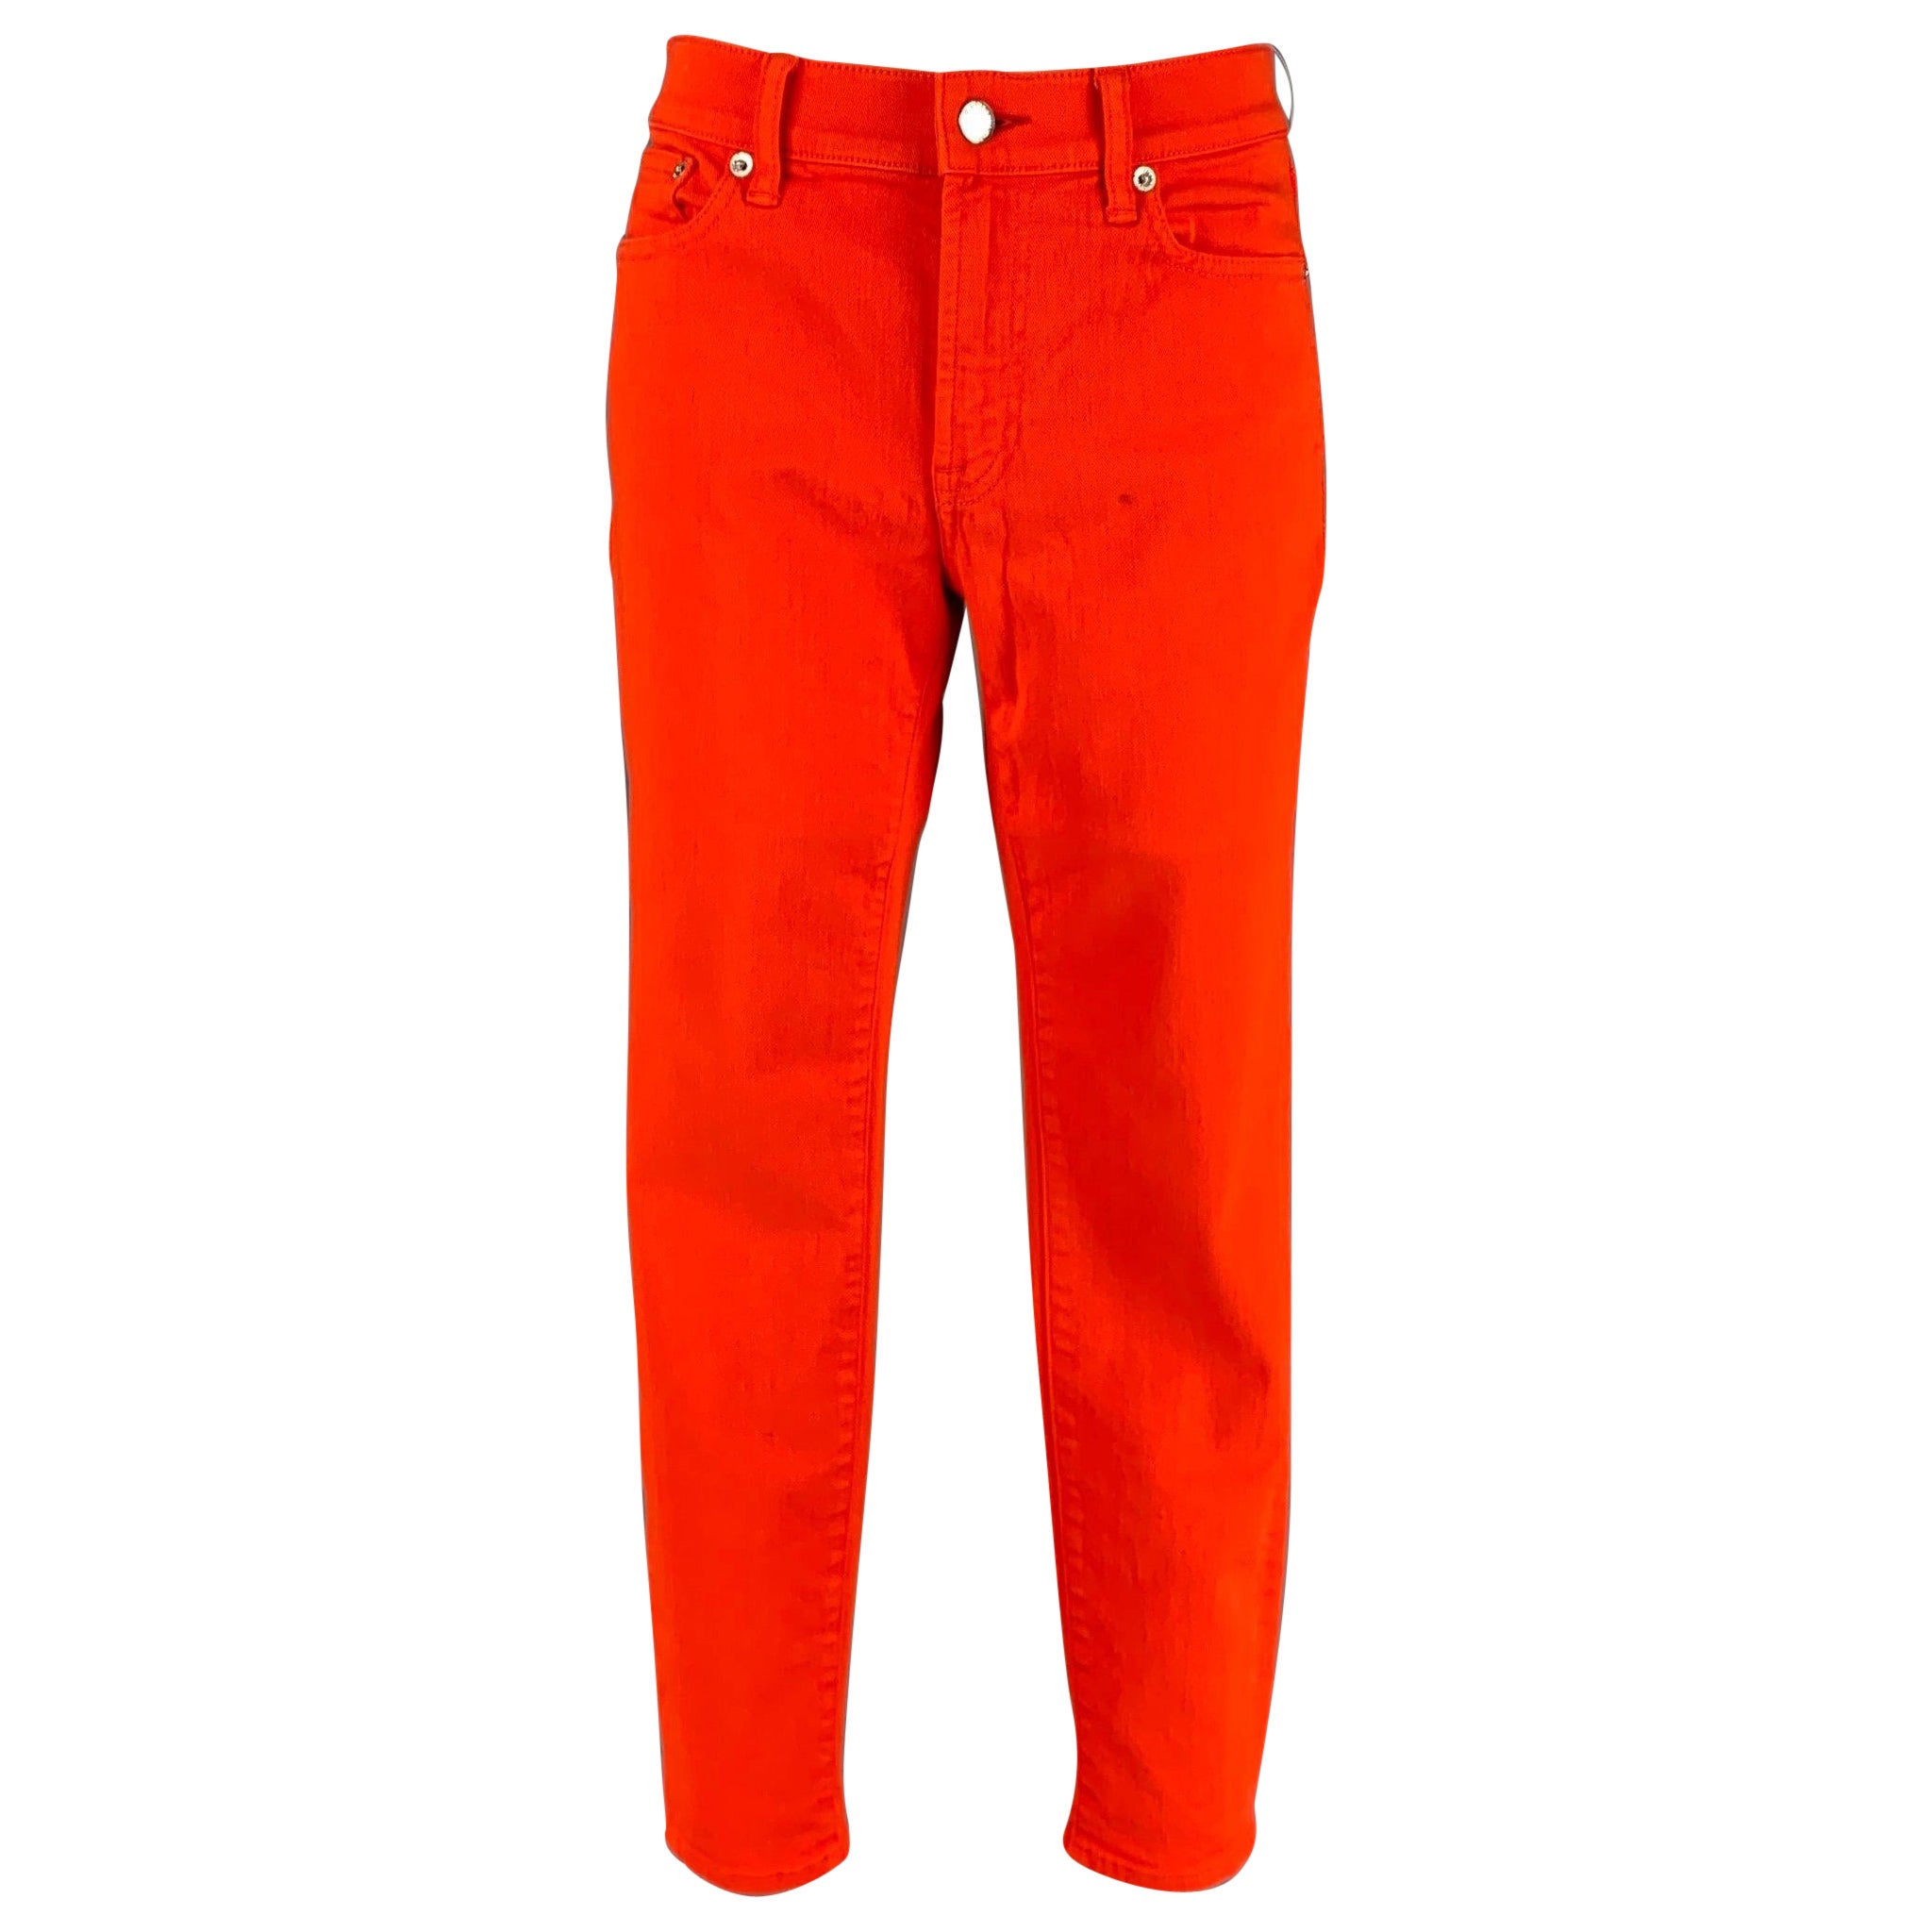 RALPH LAUREN Black Label Size 29 Orange Cotton Skinny Jeans For Sale